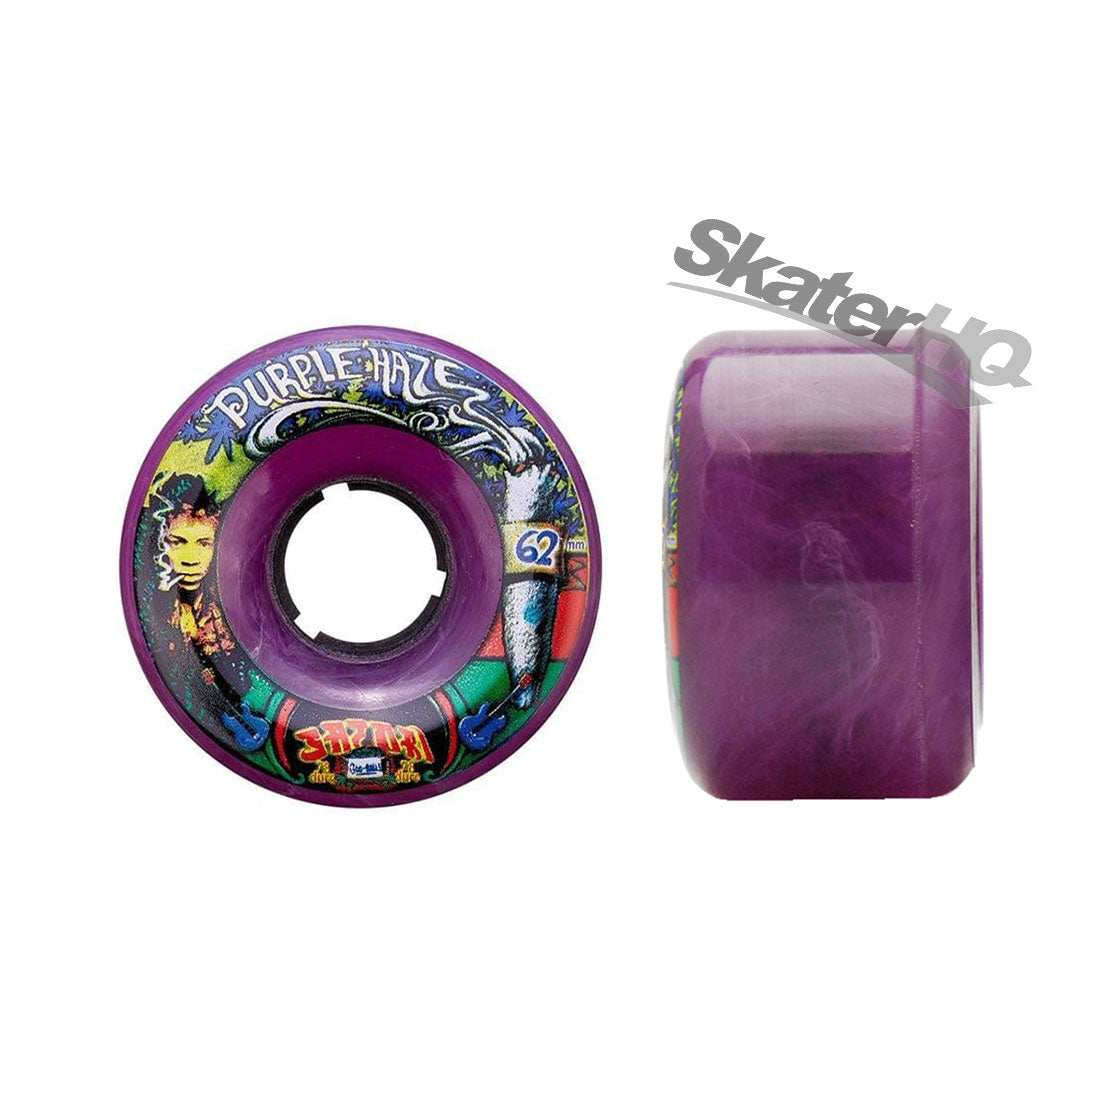 Satori Classic Goo Balls 62mm 78a 4pk - Purple Haze Skateboard Wheels